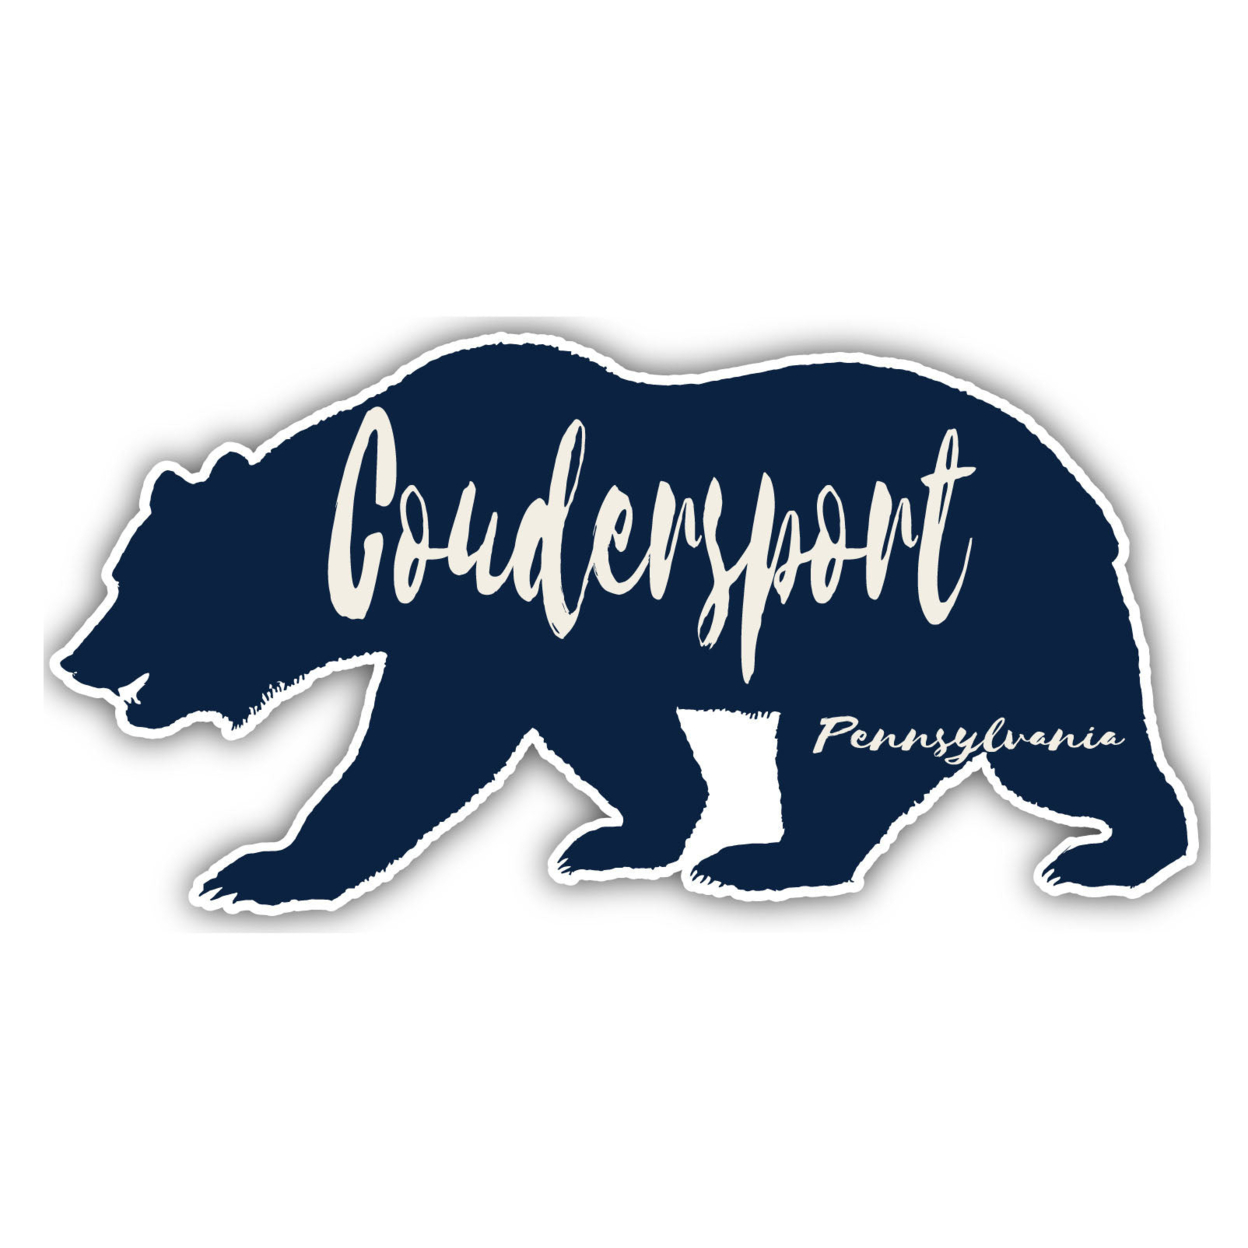 Coudersport Pennsylvania Souvenir Decorative Stickers (Choose Theme And Size) - Single Unit, 12-Inch, Bear